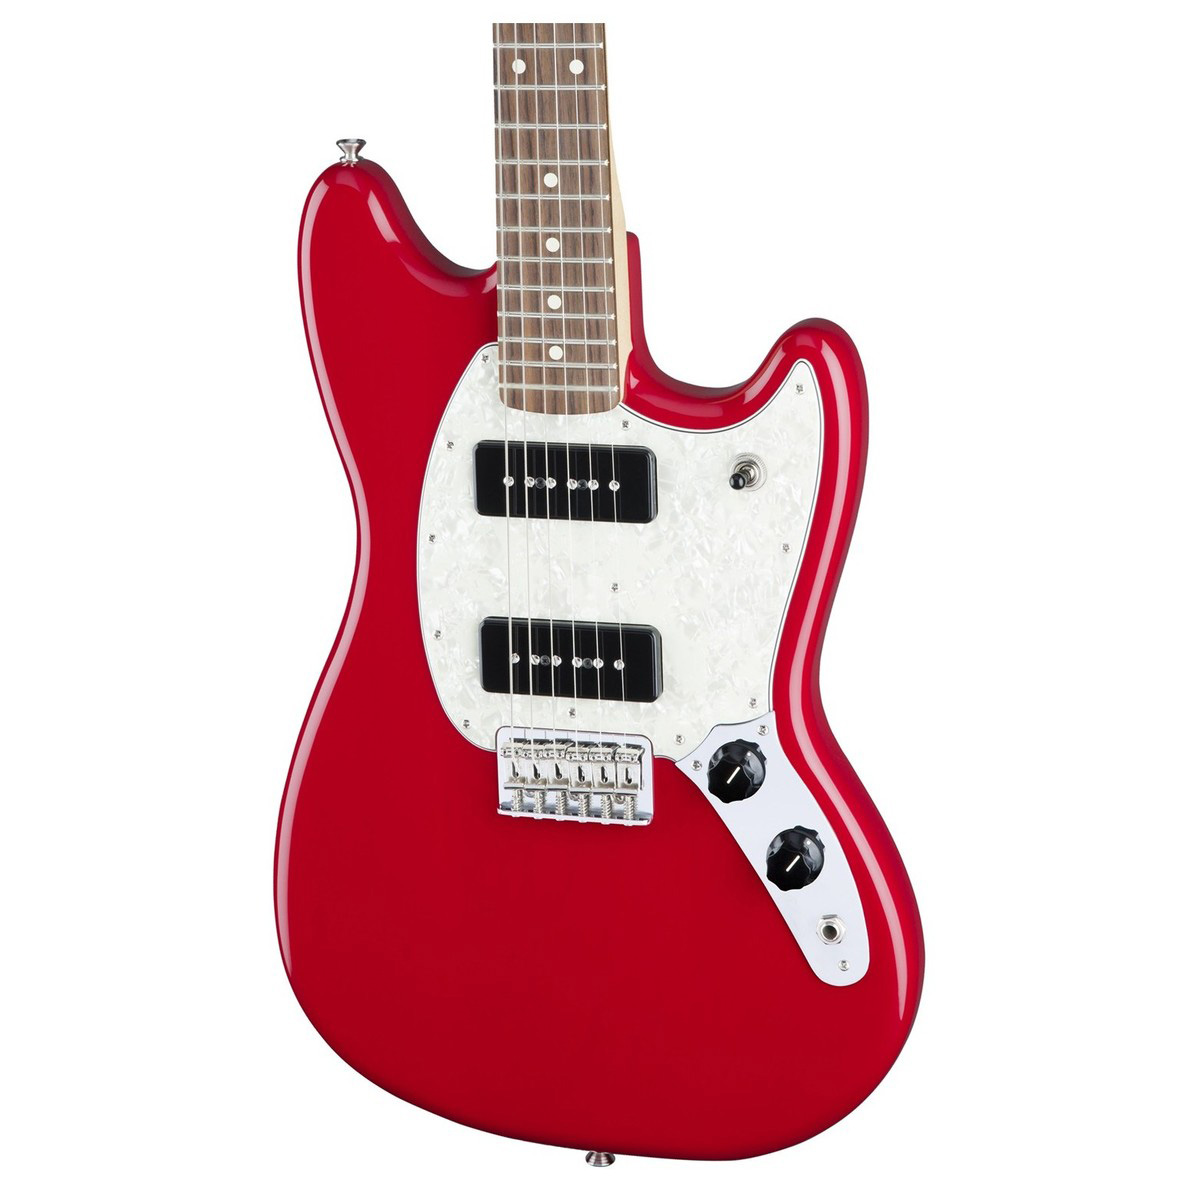 Гитара мустанг. Fender Mustang гитара. Fender Mustang Red. Электрогитара Фендер Мустанг. Fender Mustang красный.